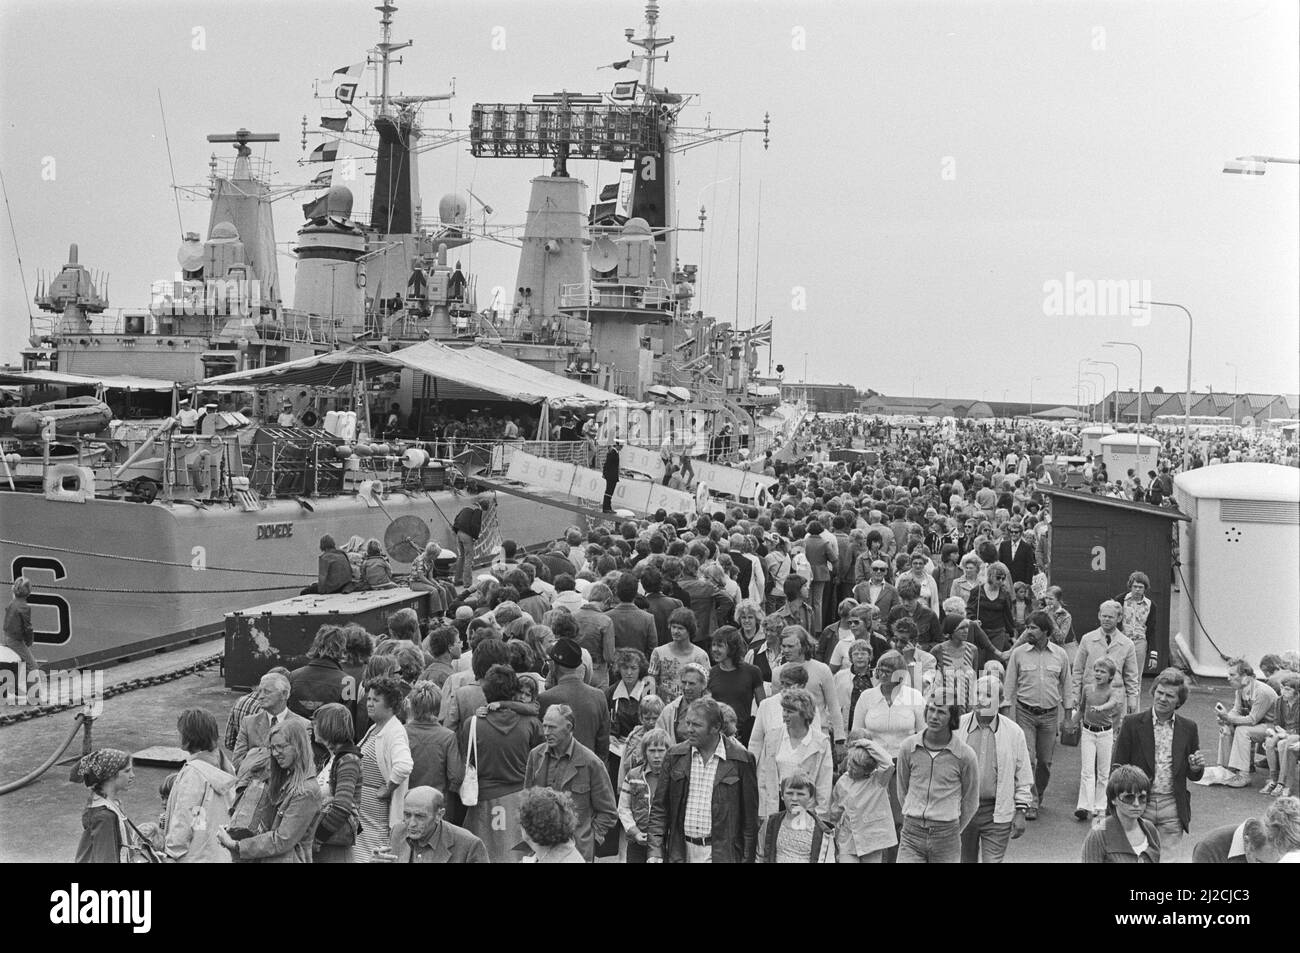 National Fleet Days in Den Helder, great interest in viewing warships around July 23, 1976 Stock Photo